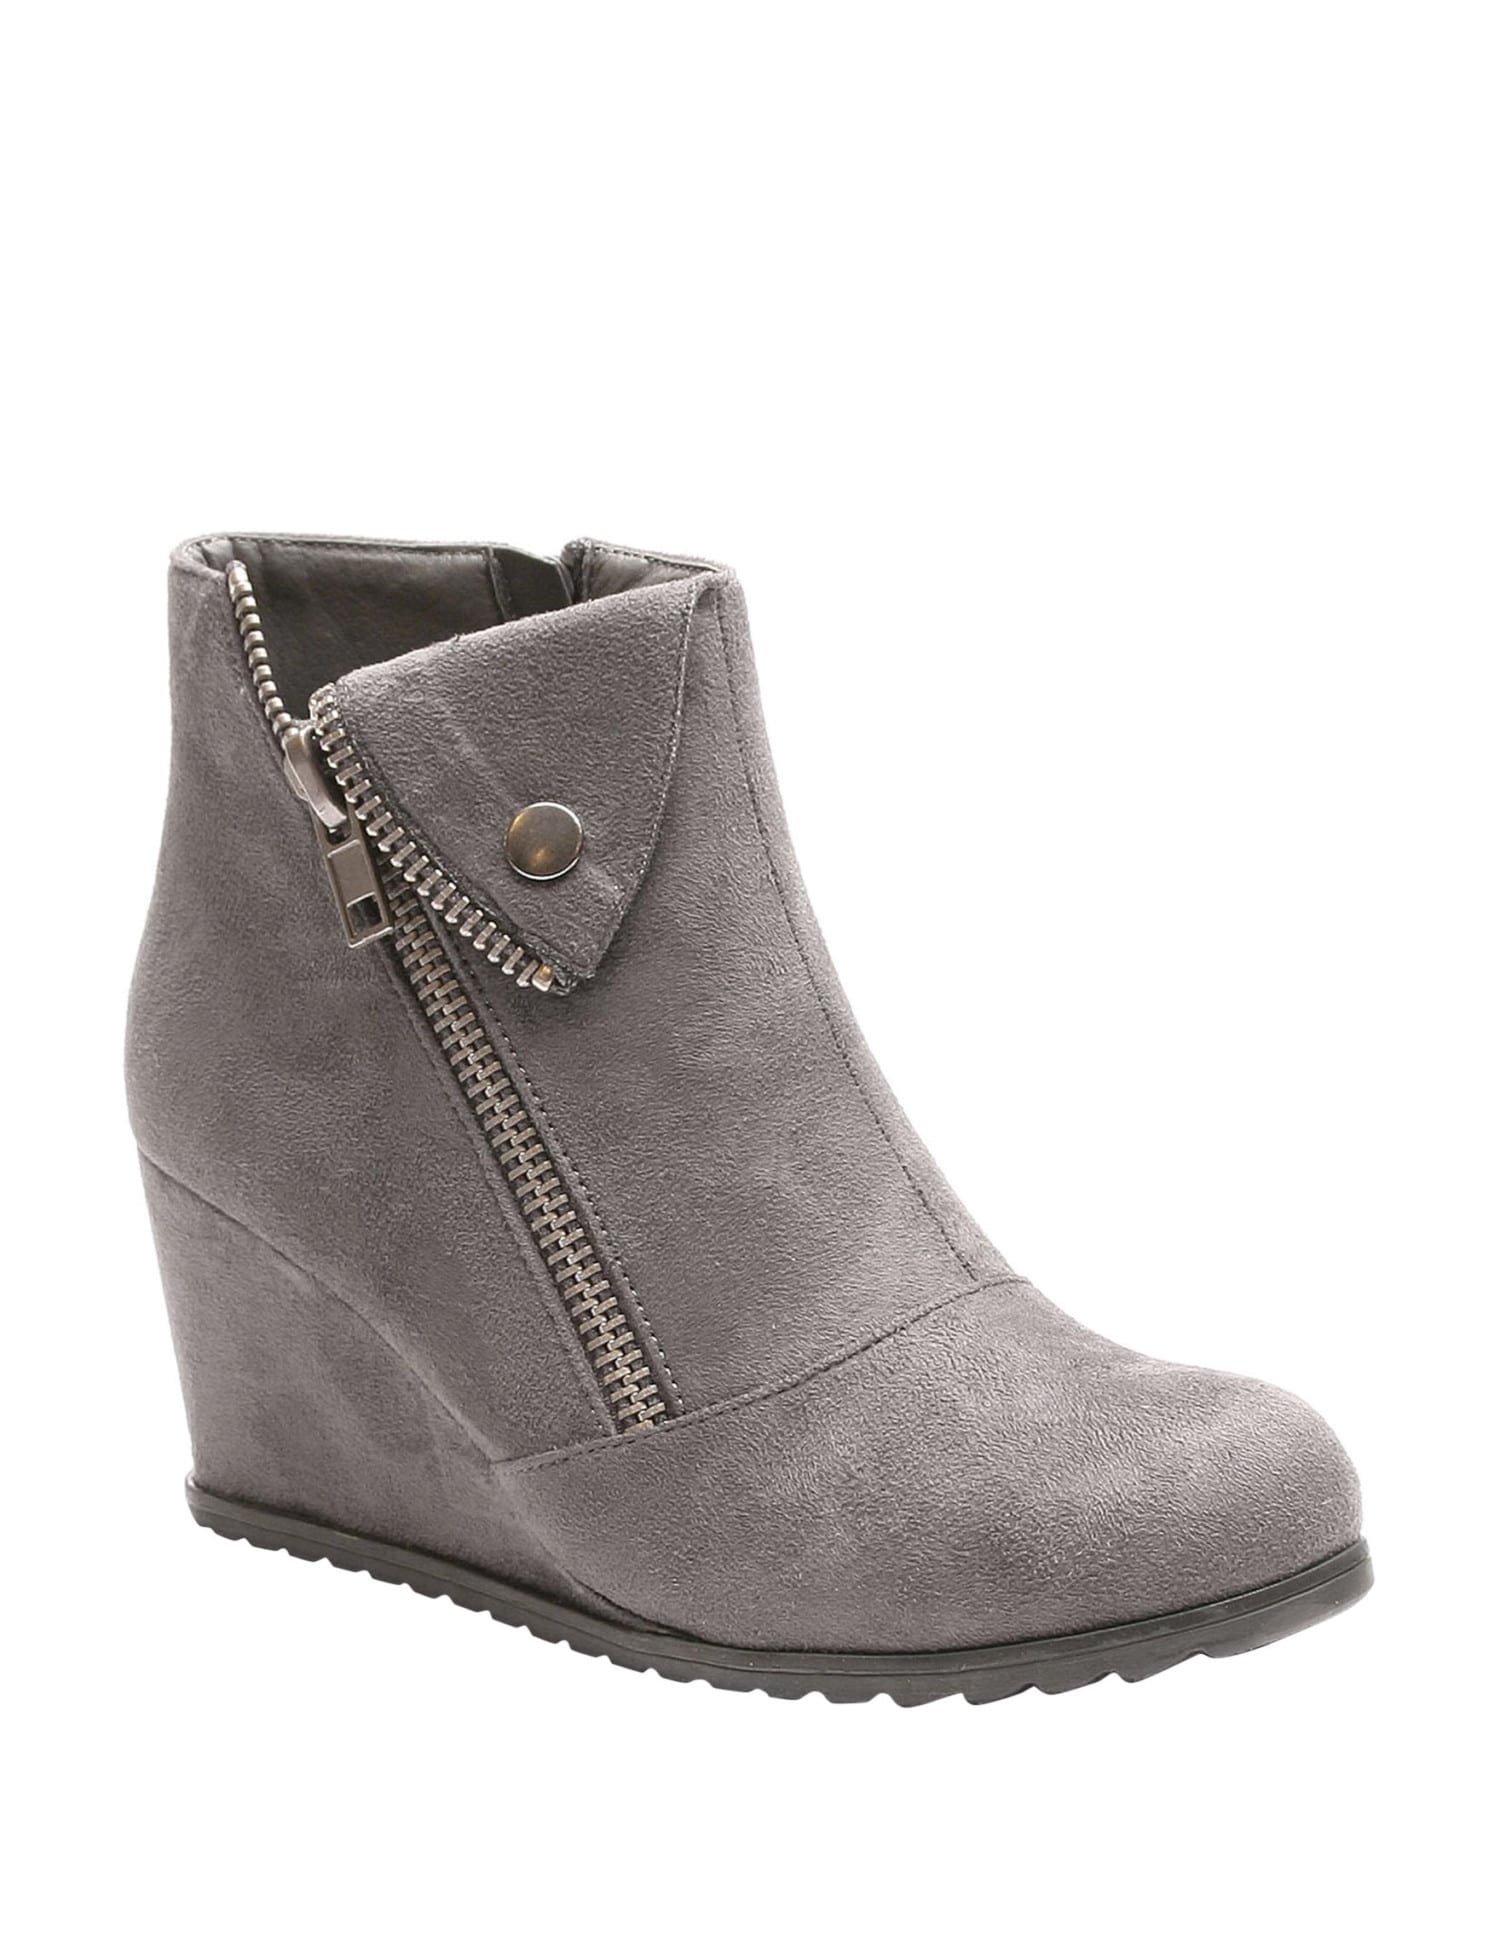 comfy heeled boots